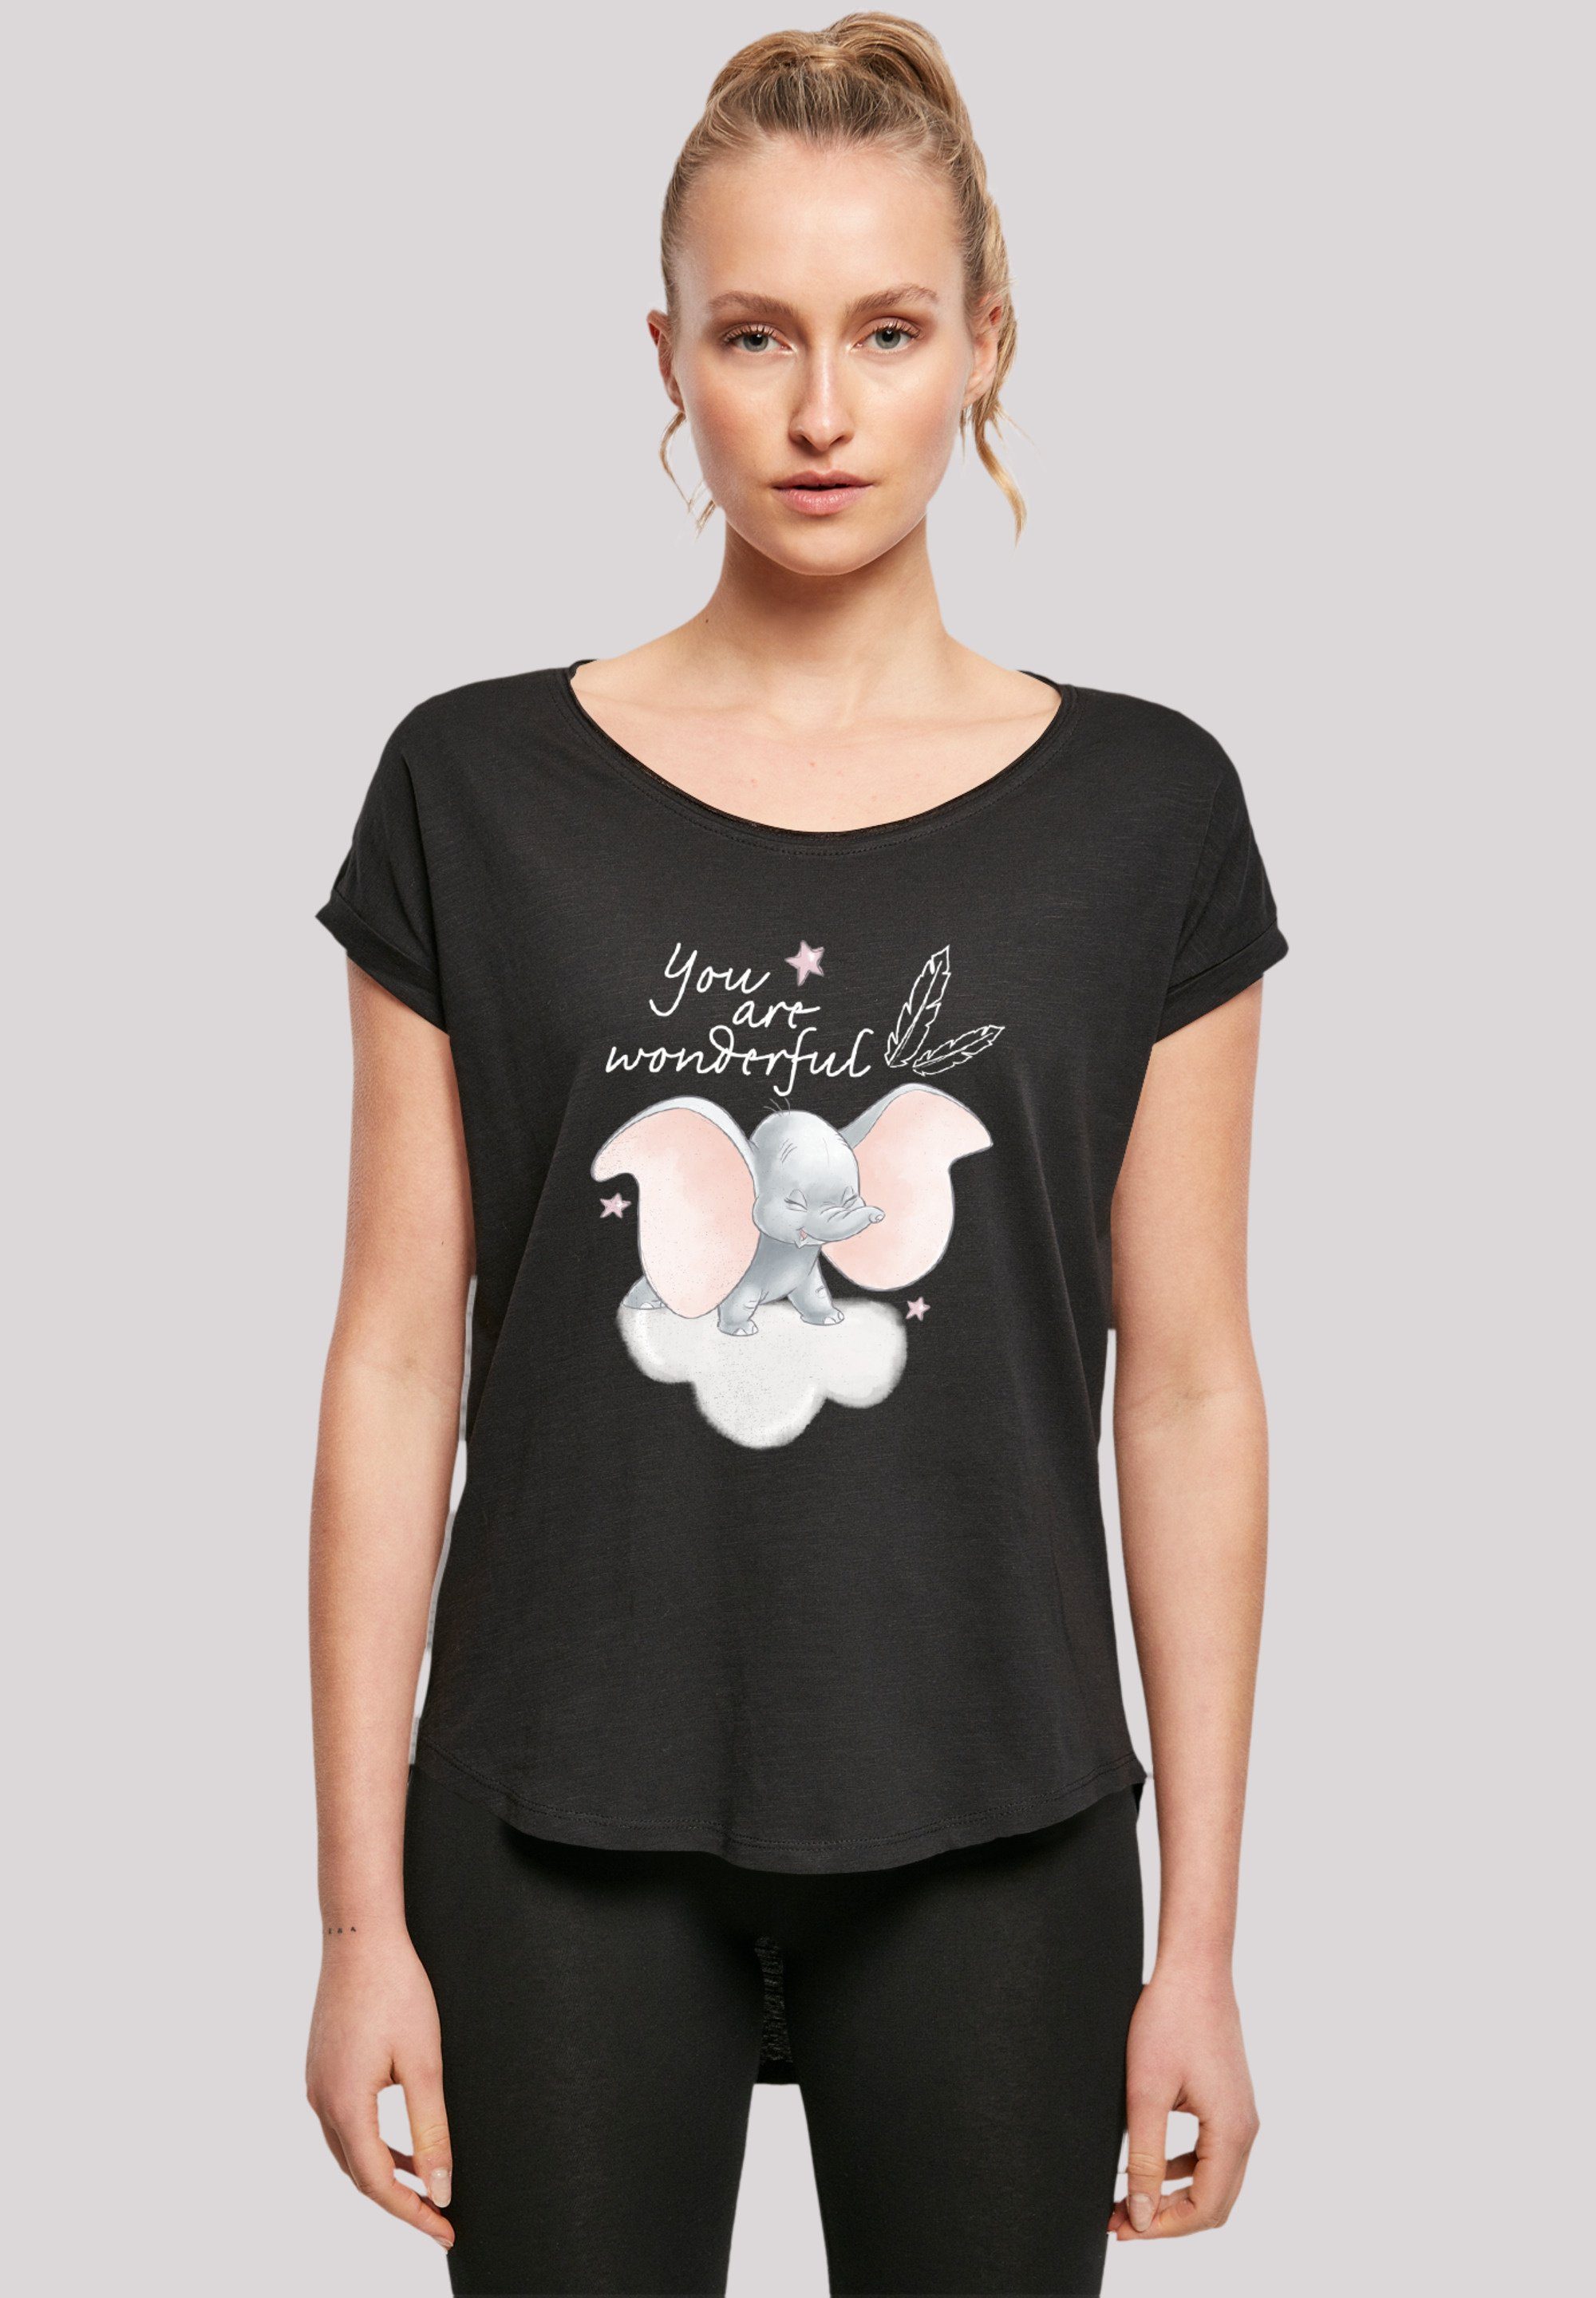 Disney You Wonderful Qualität F4NT4STIC Premium T-Shirt Dumbo Are